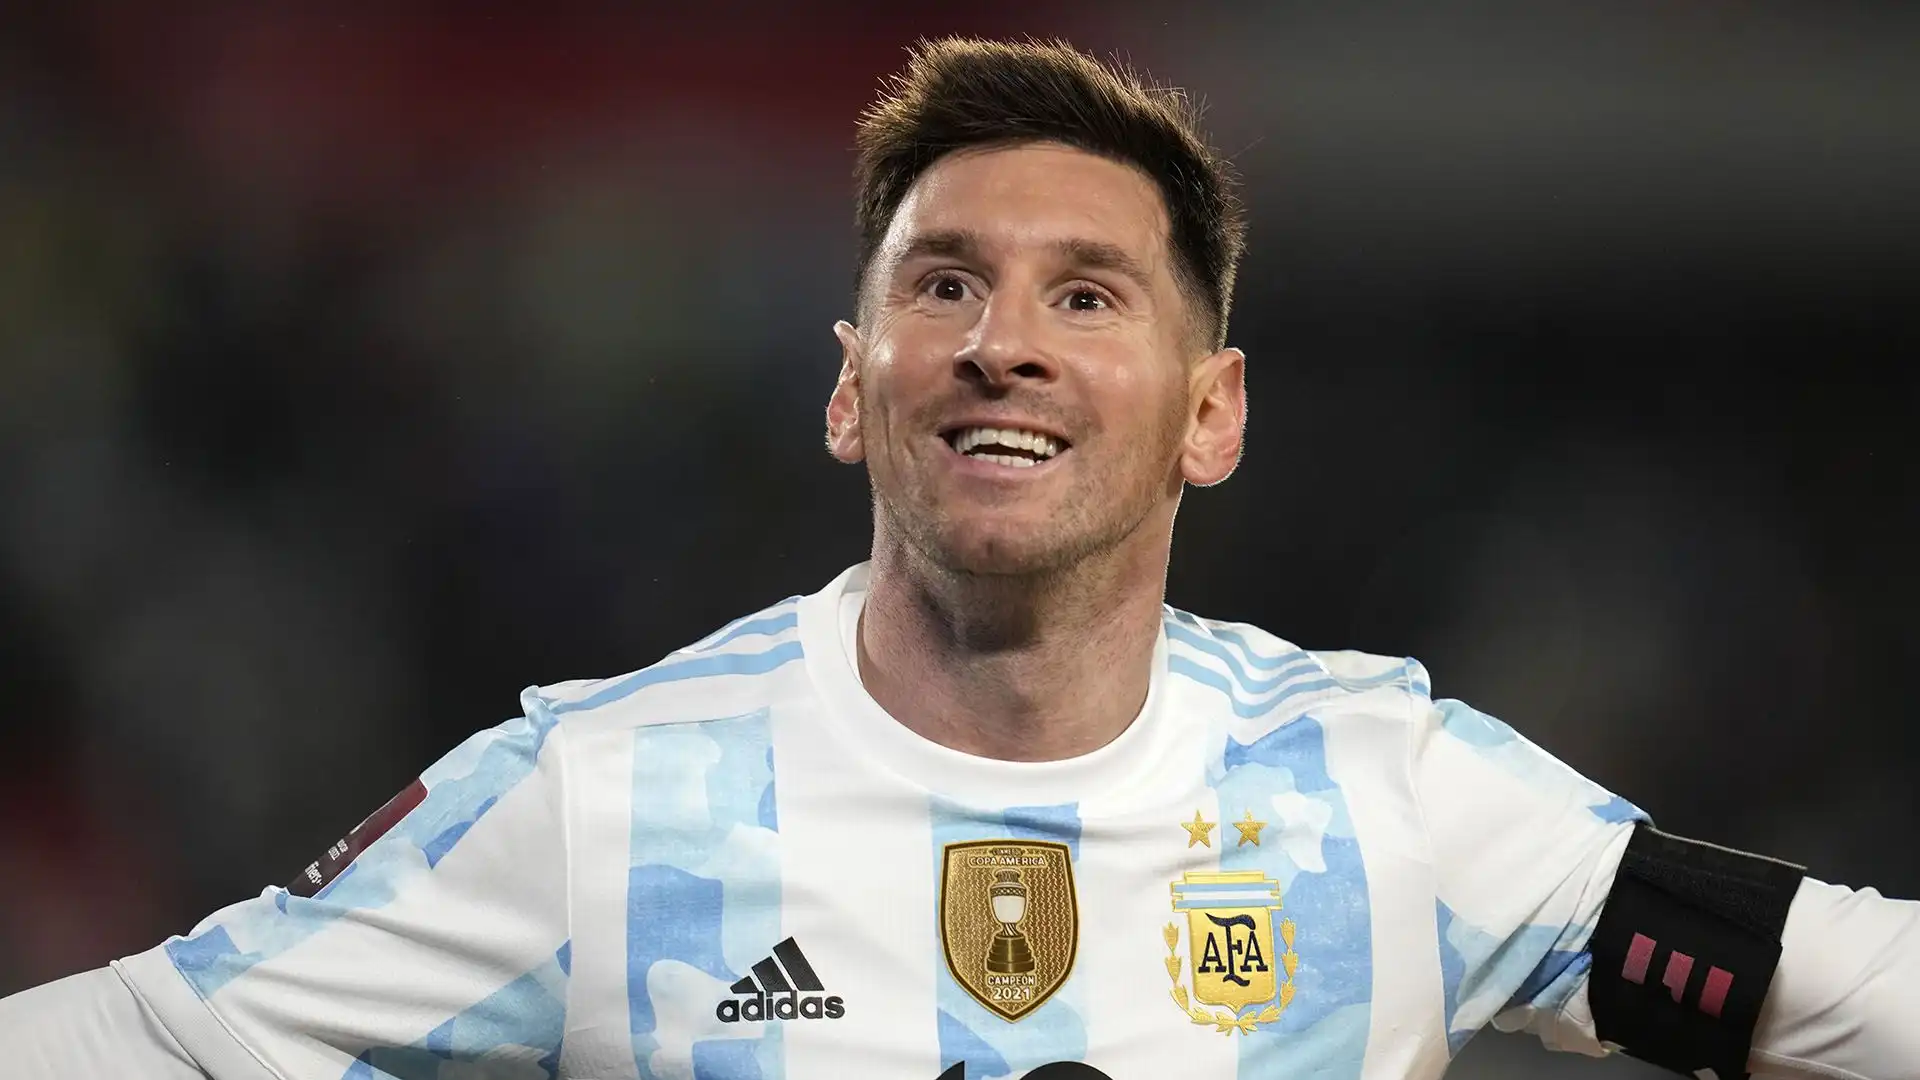 "Finchè mi sentirò in condizione, continuerò a giocare" ha detto Messi